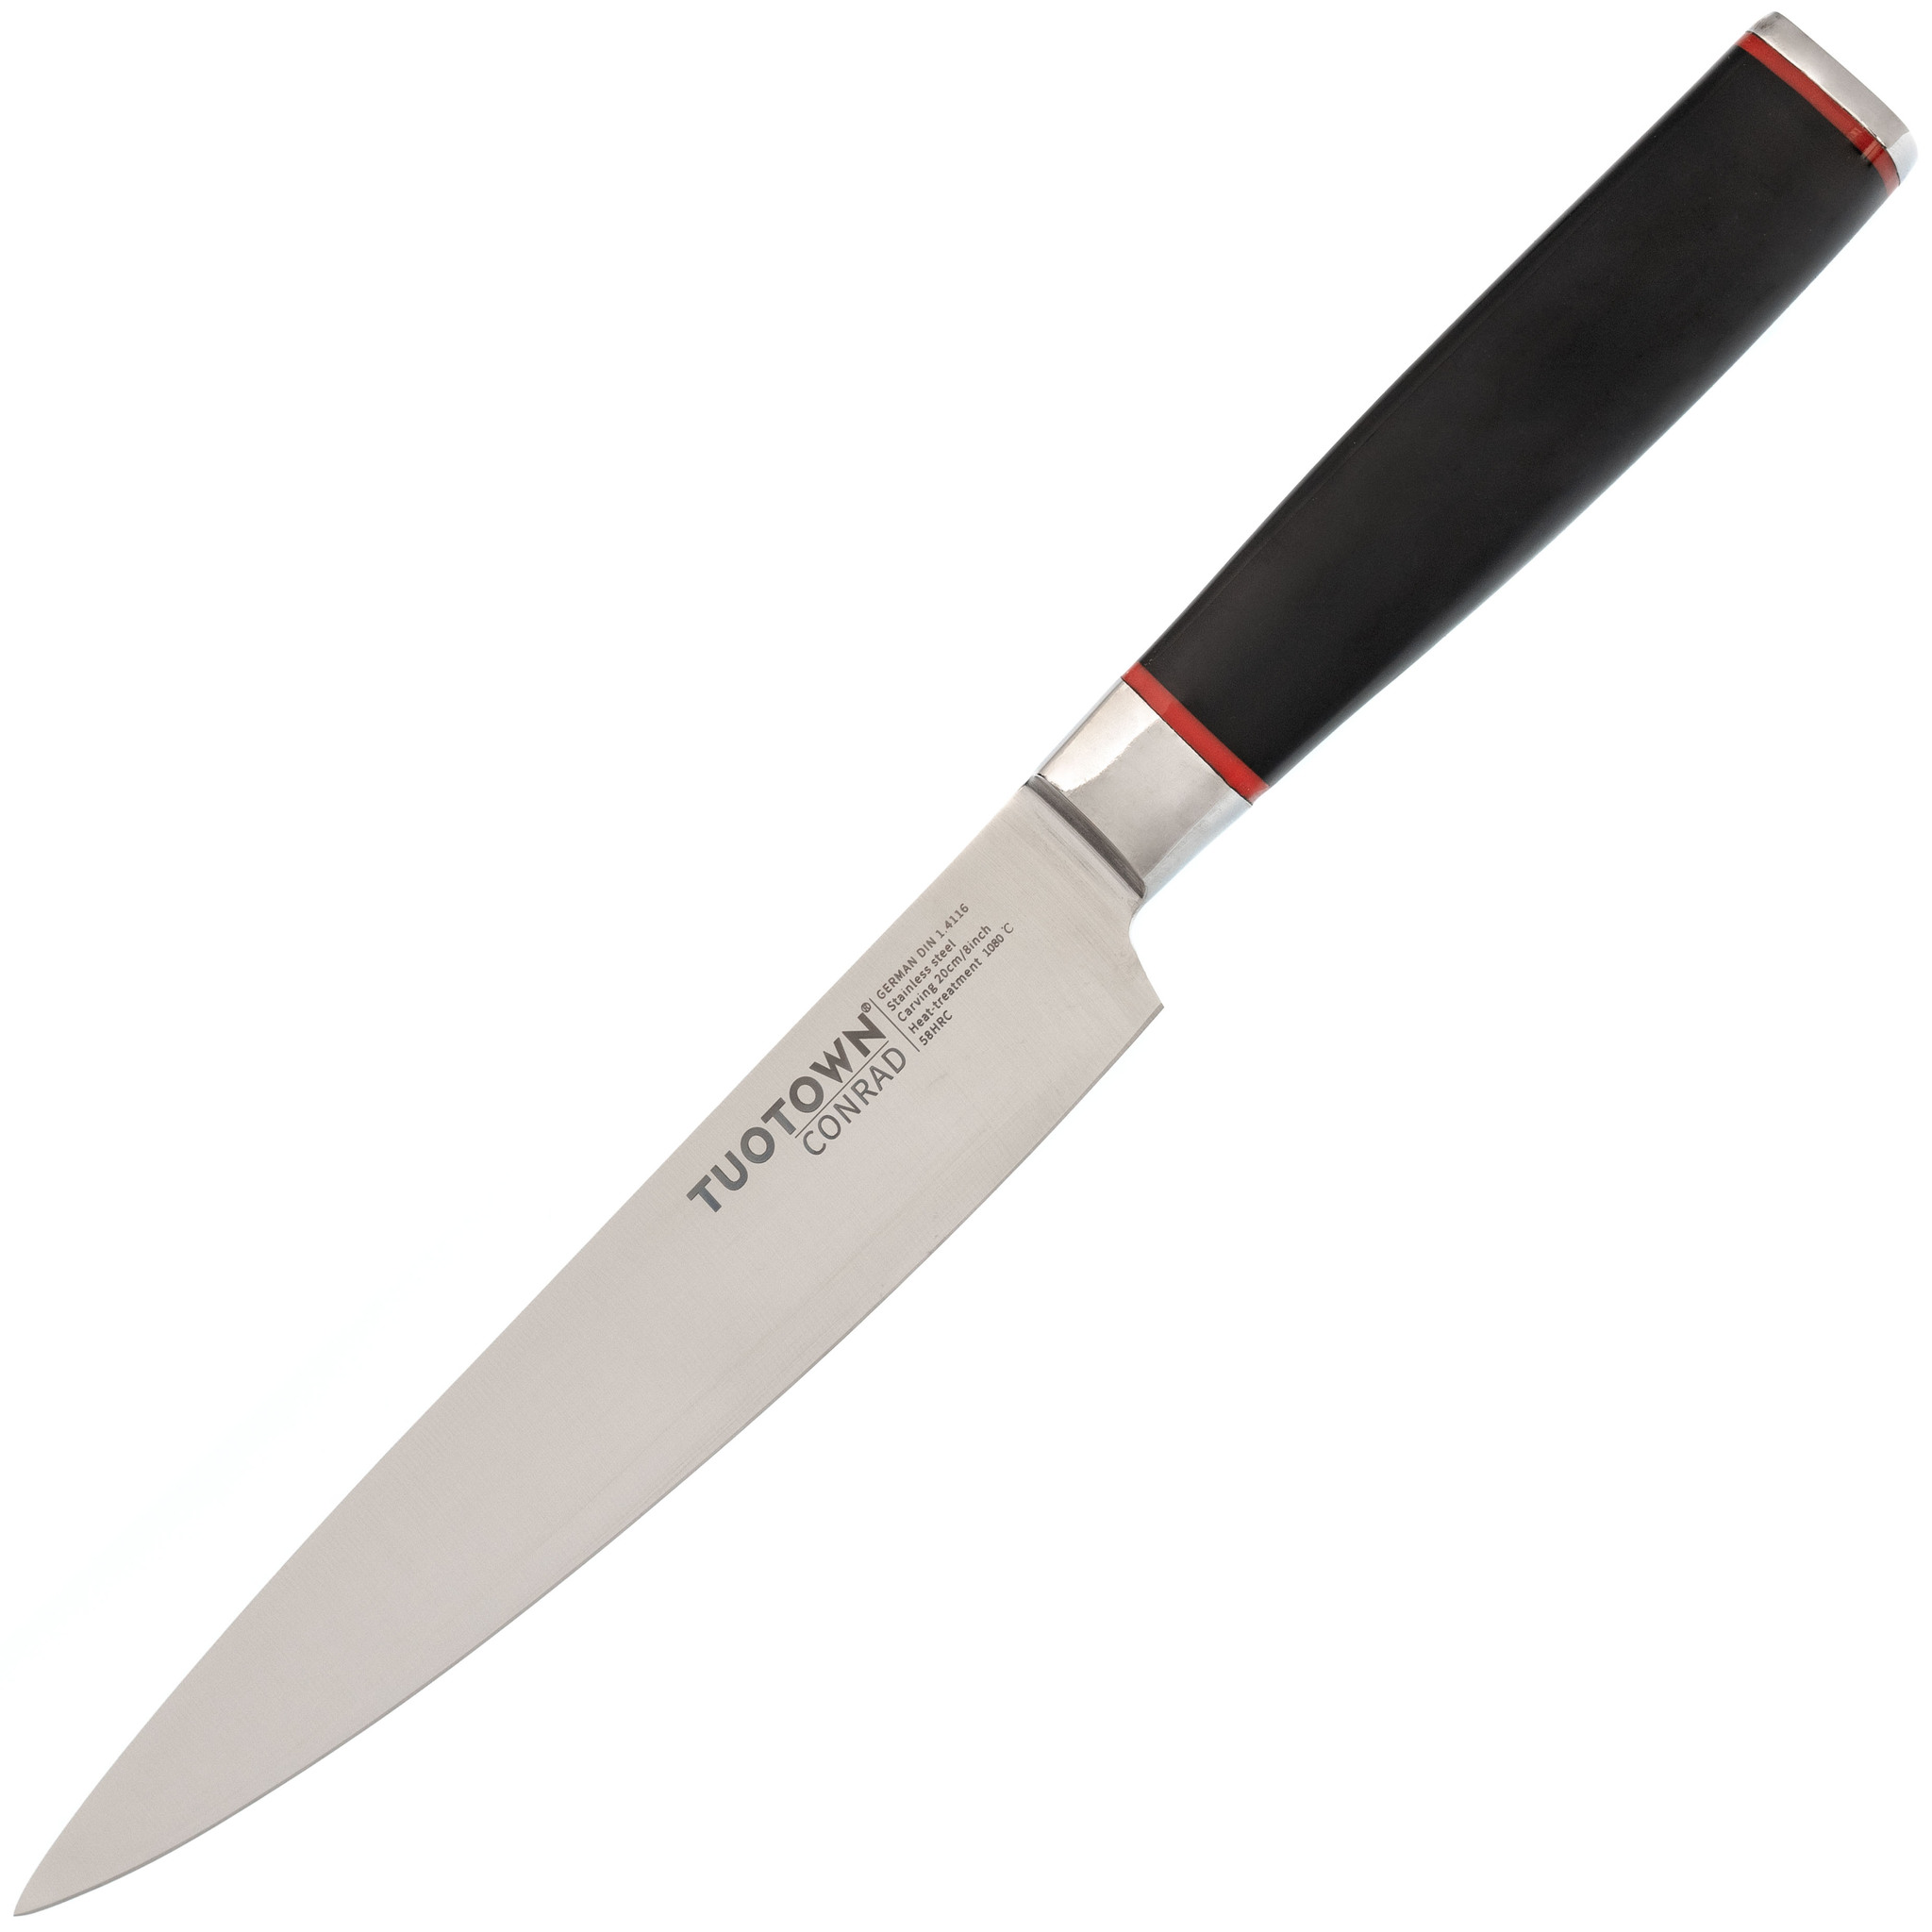 Кухонный нож для нарезки Tuotown, серия CONRAD, сталь 1.4116